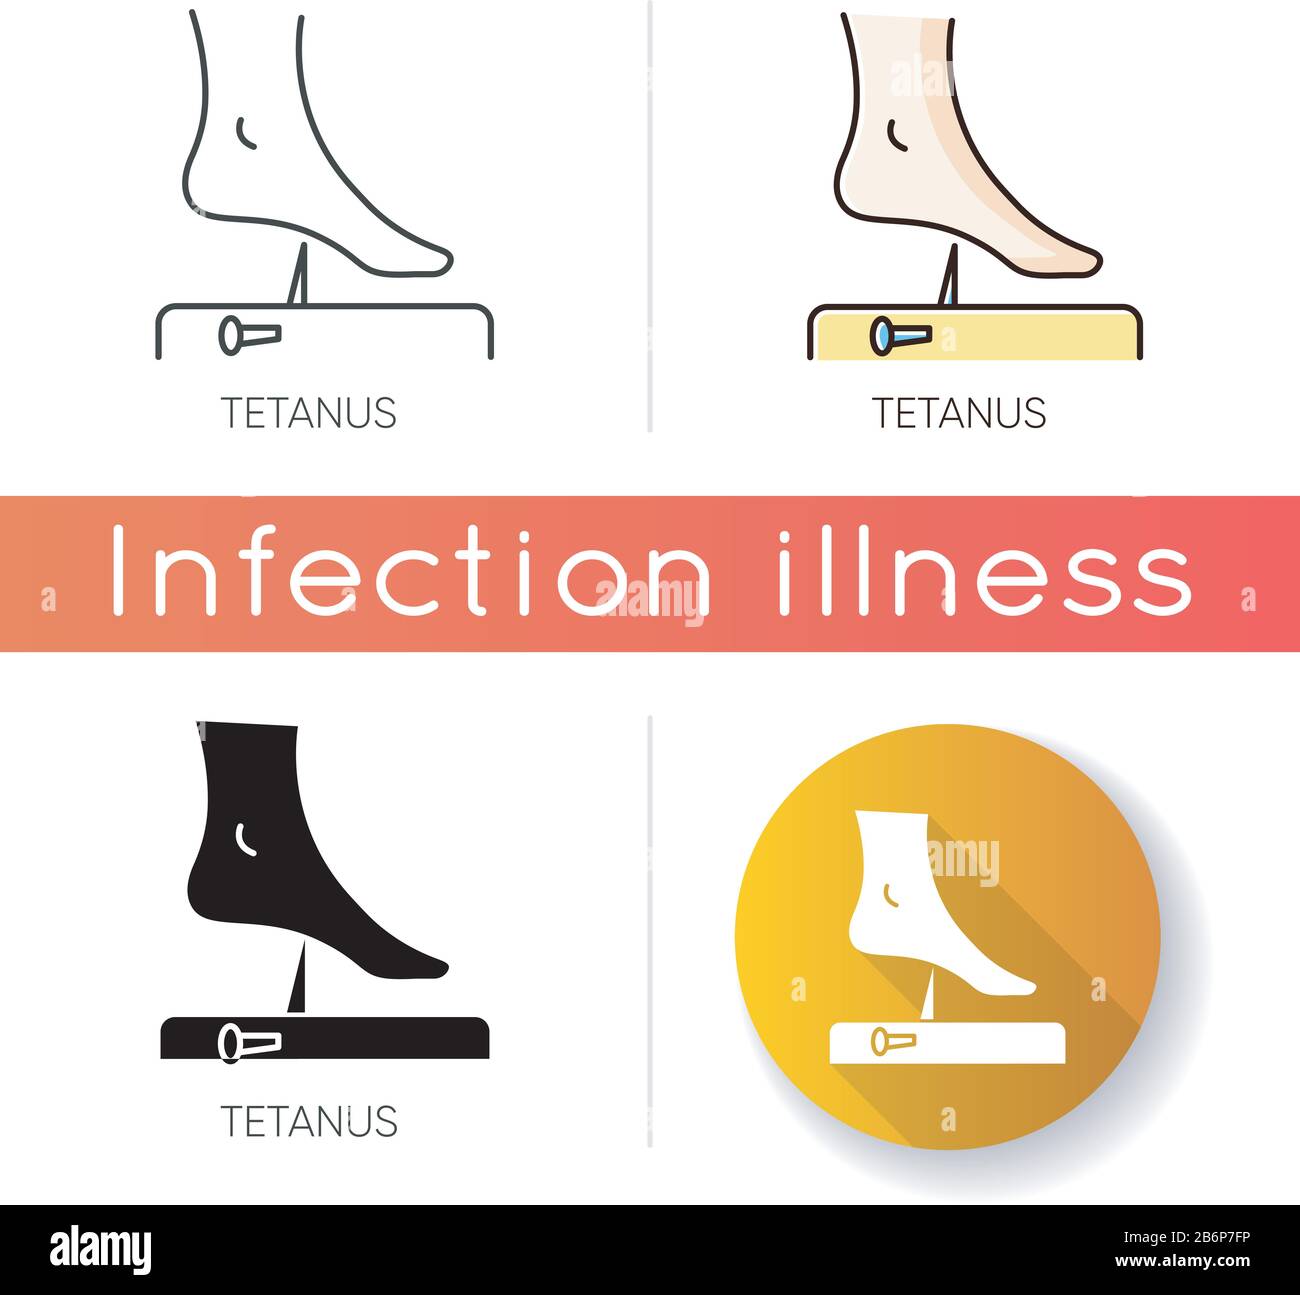 Tetanus Disease With Humans